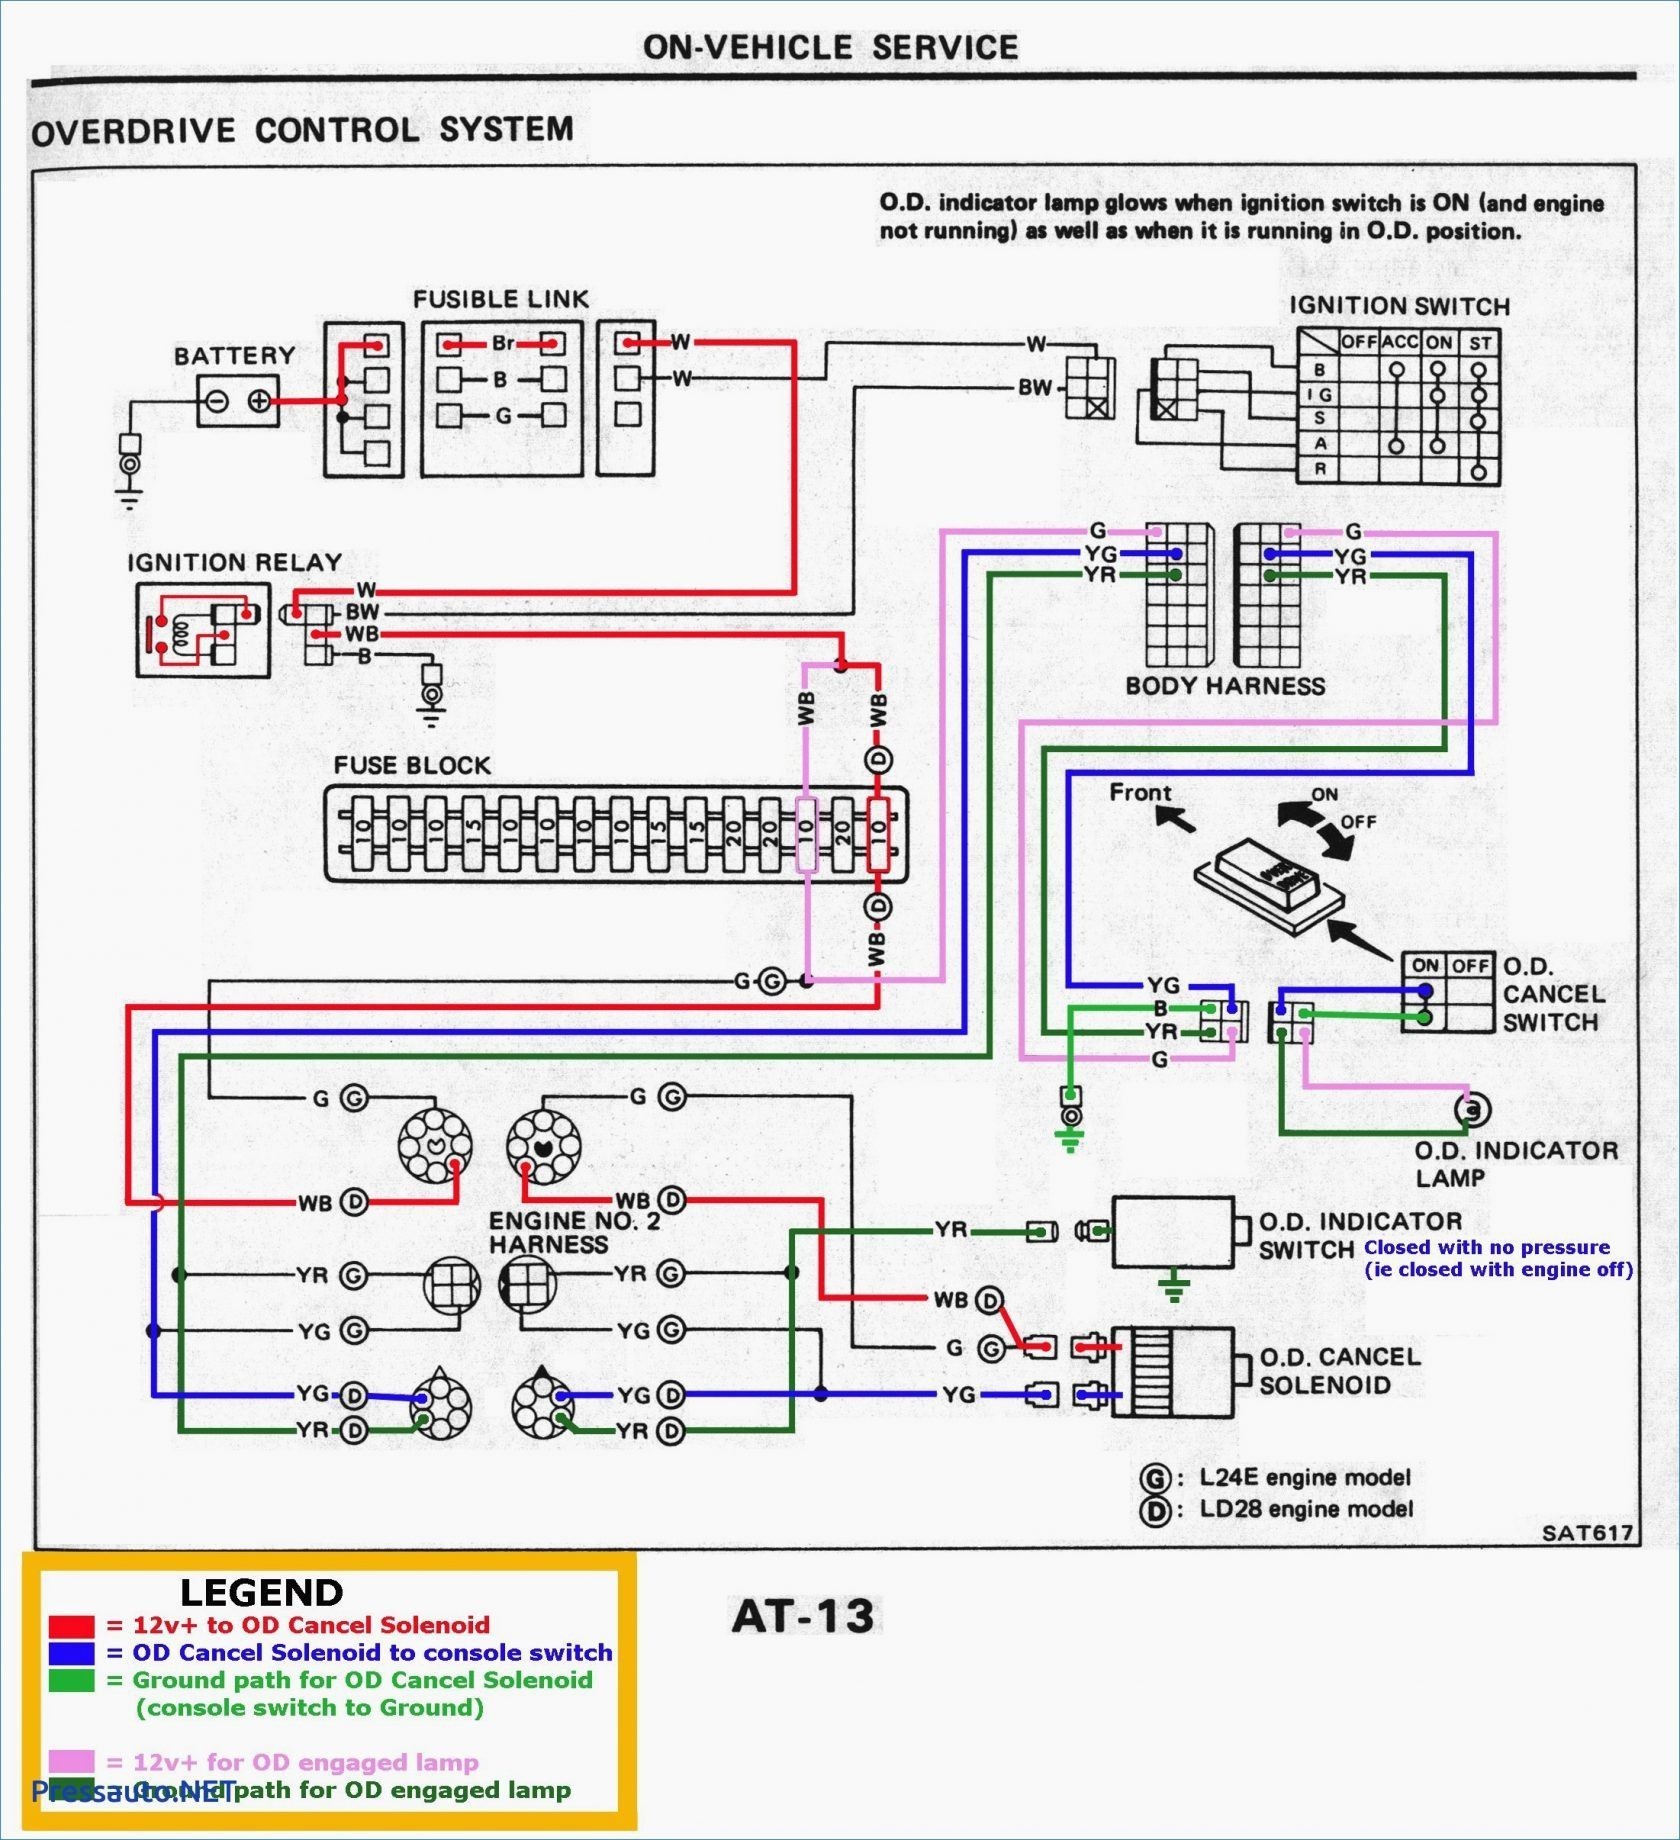 2005 Chevy Equinox Engine Diagram 2006 Chevy Wiring Diagram Wiring Diagram toolbox Of 2005 Chevy Equinox Engine Diagram